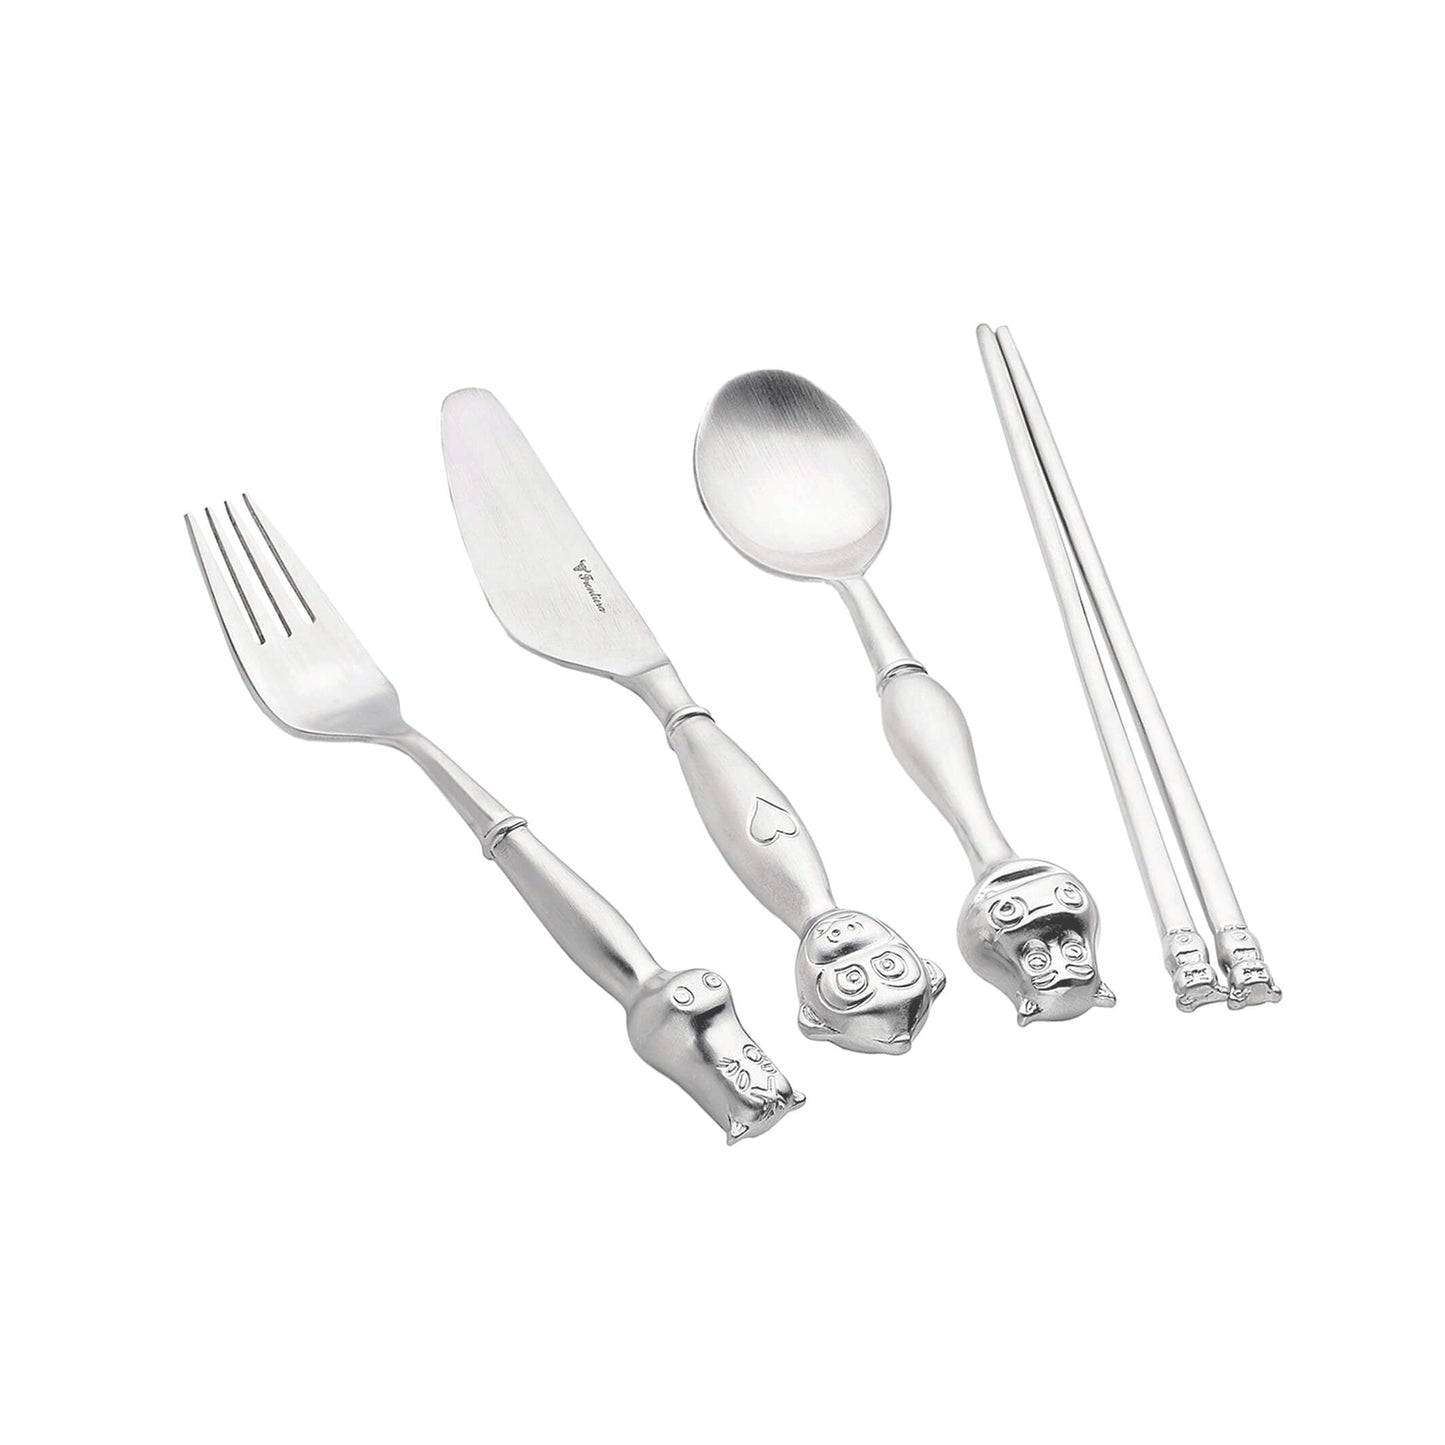 Madagascar premium quality stainless steel children cutlery set